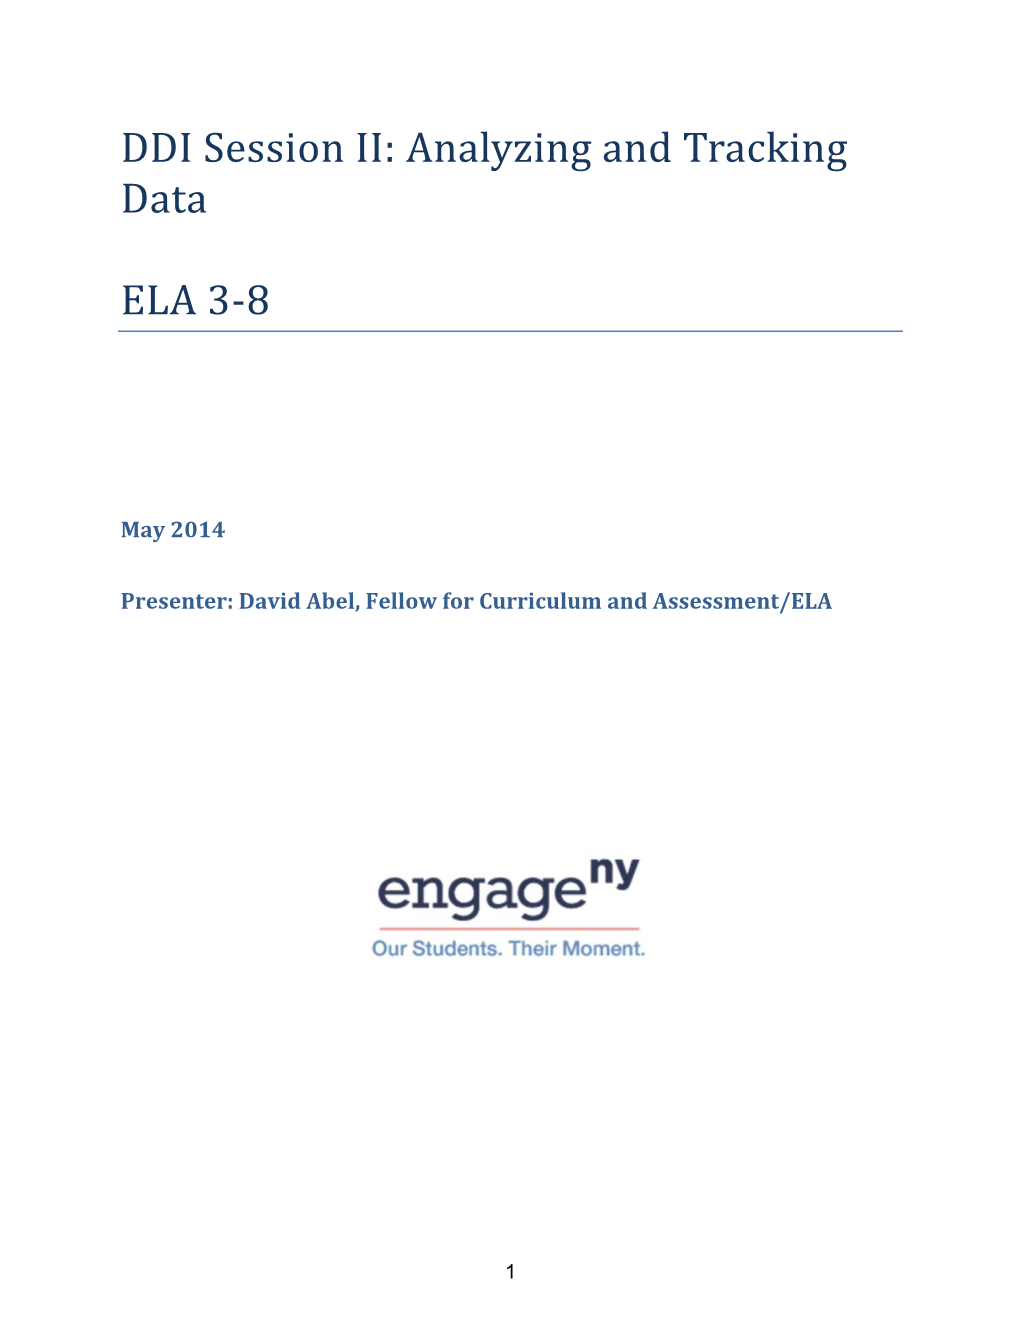 DDI Session II: Analyzing and Tracking Data ELA